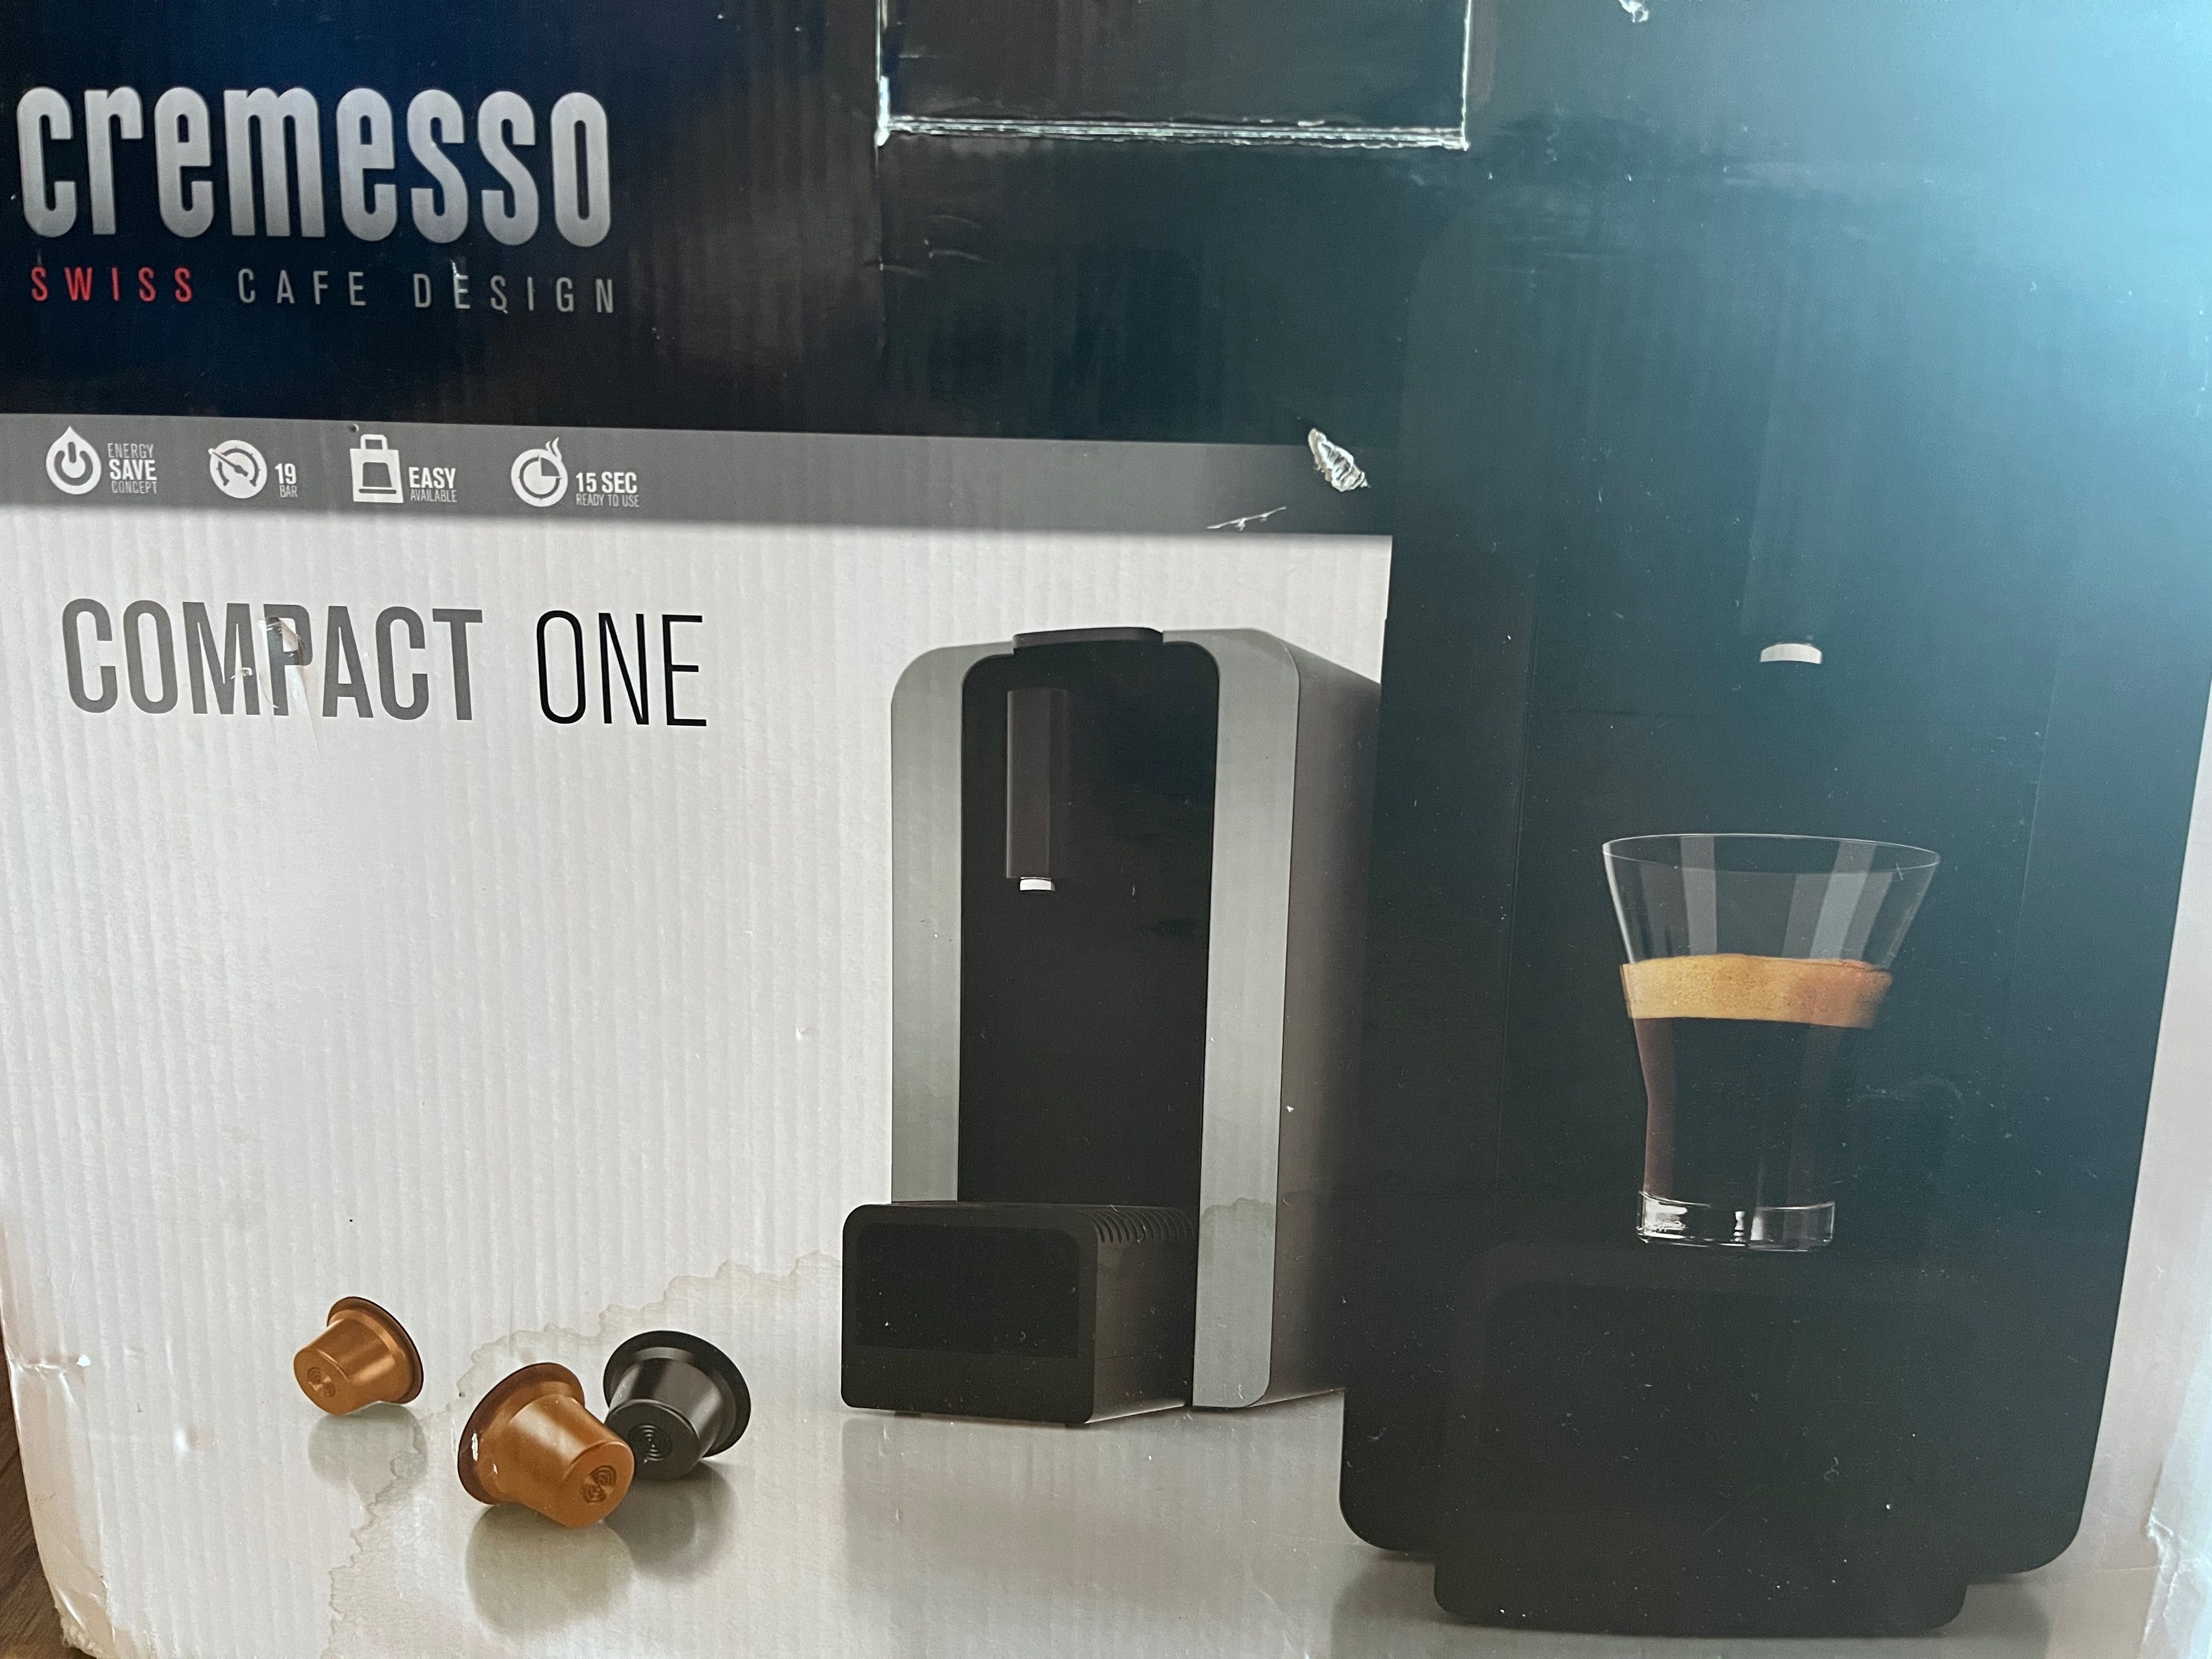 Ekspres do kawy Cremesso compact one